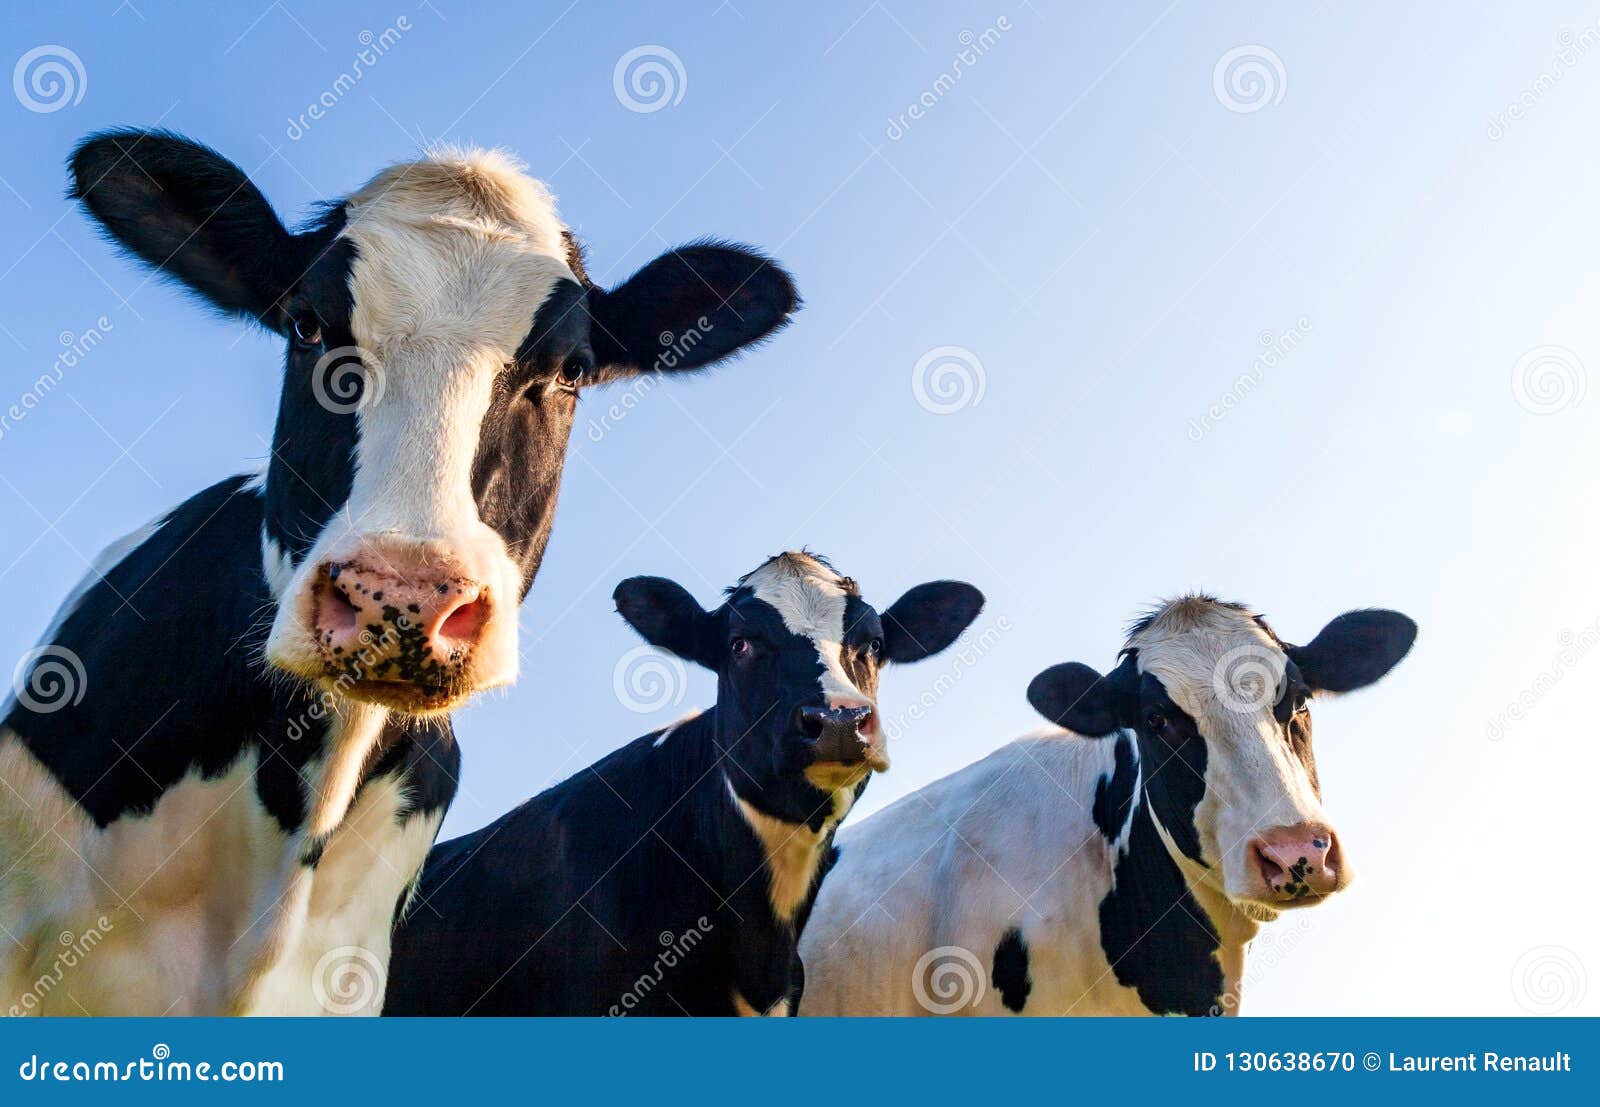 holstein cows over blue sky